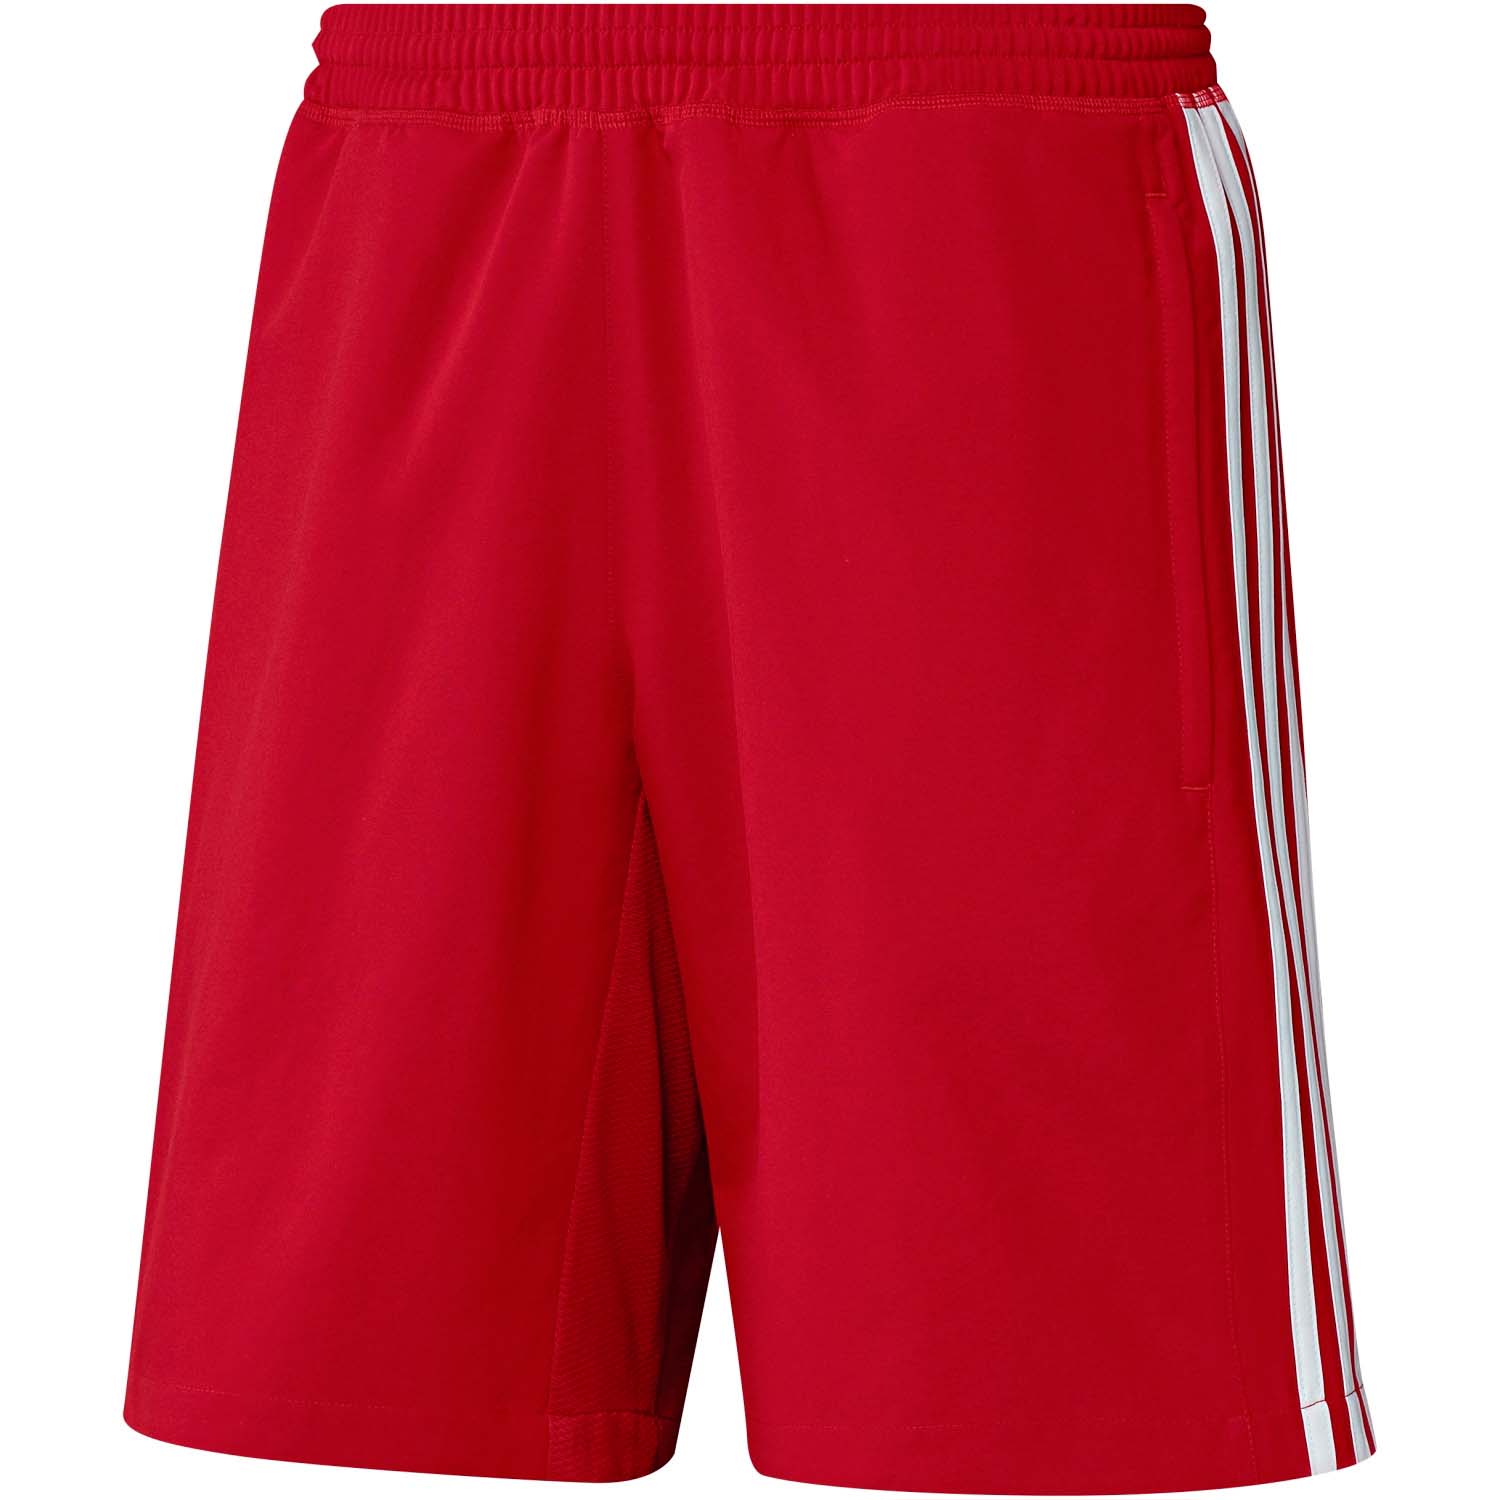 Pantalón Corto adidas T16 Cc M - rojo - 